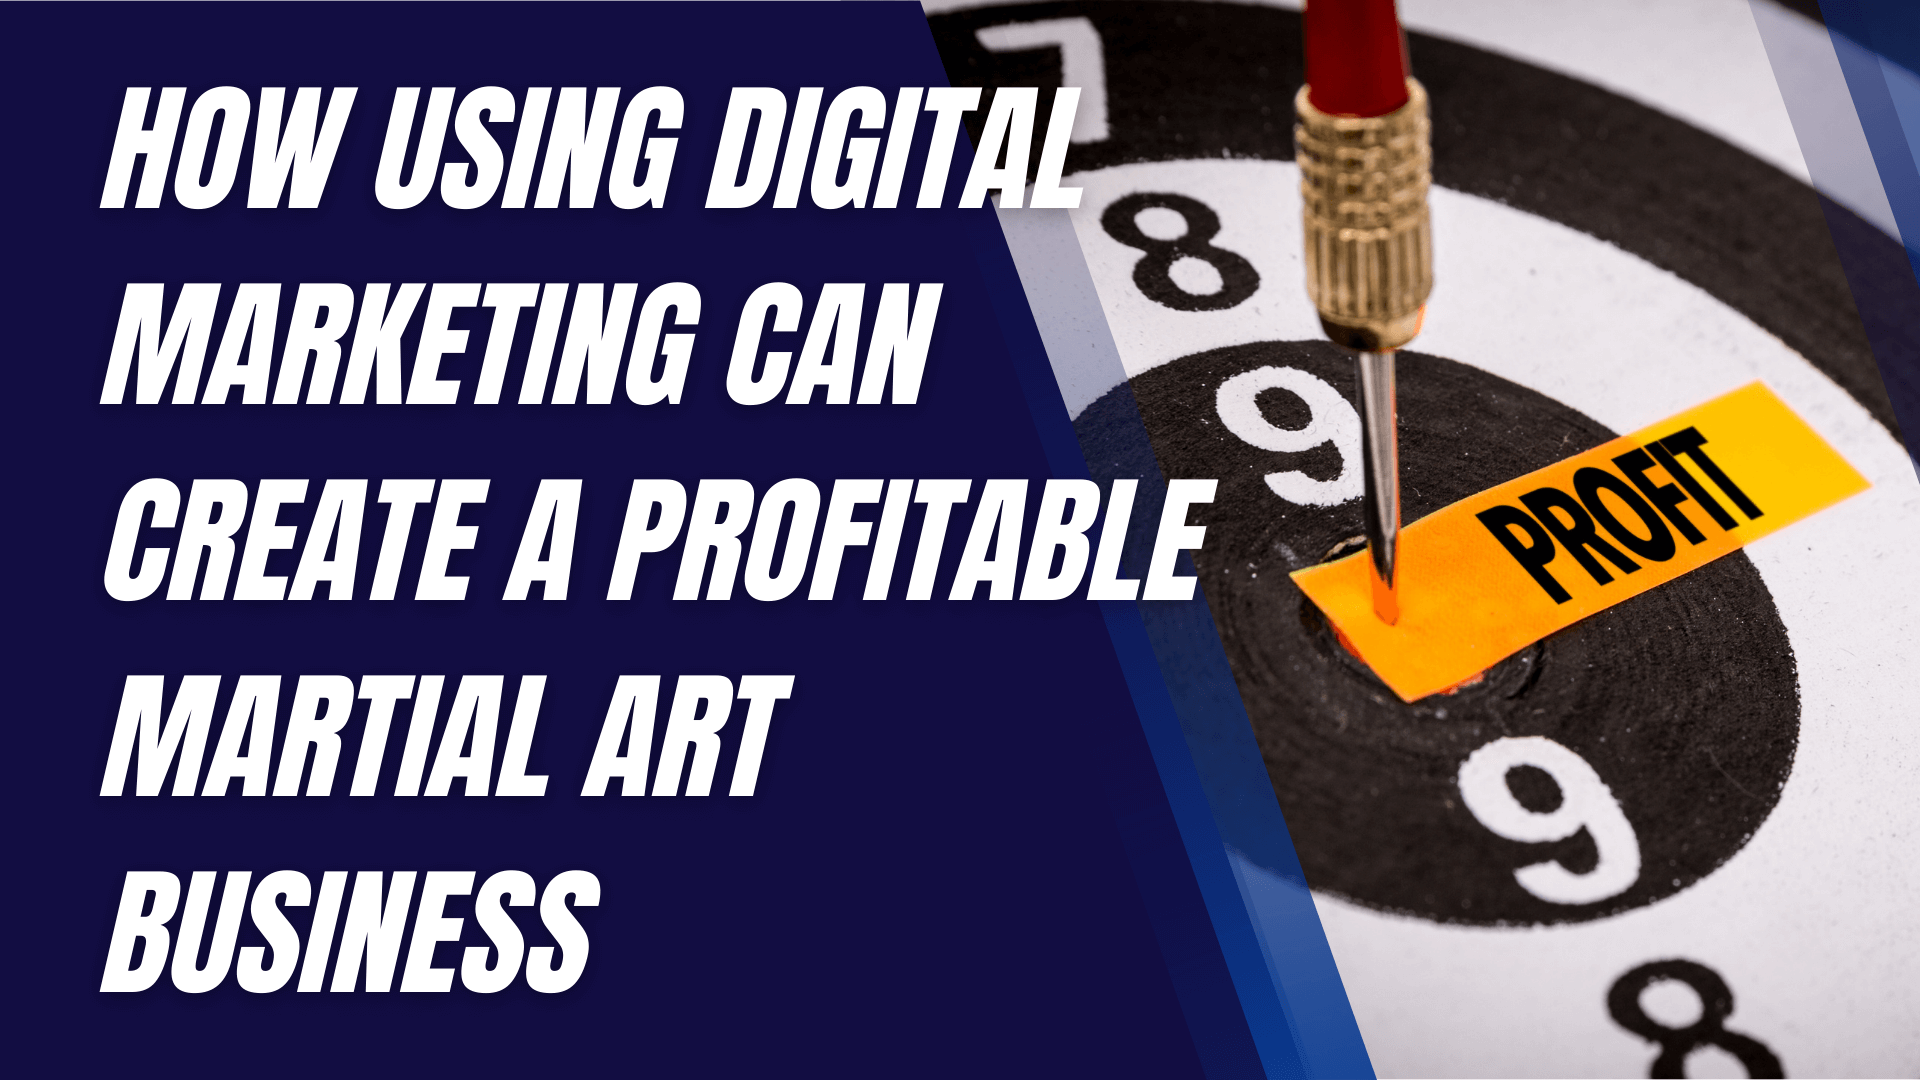 How Using Digital Marketing Can Create a Profitable Martial Art Business